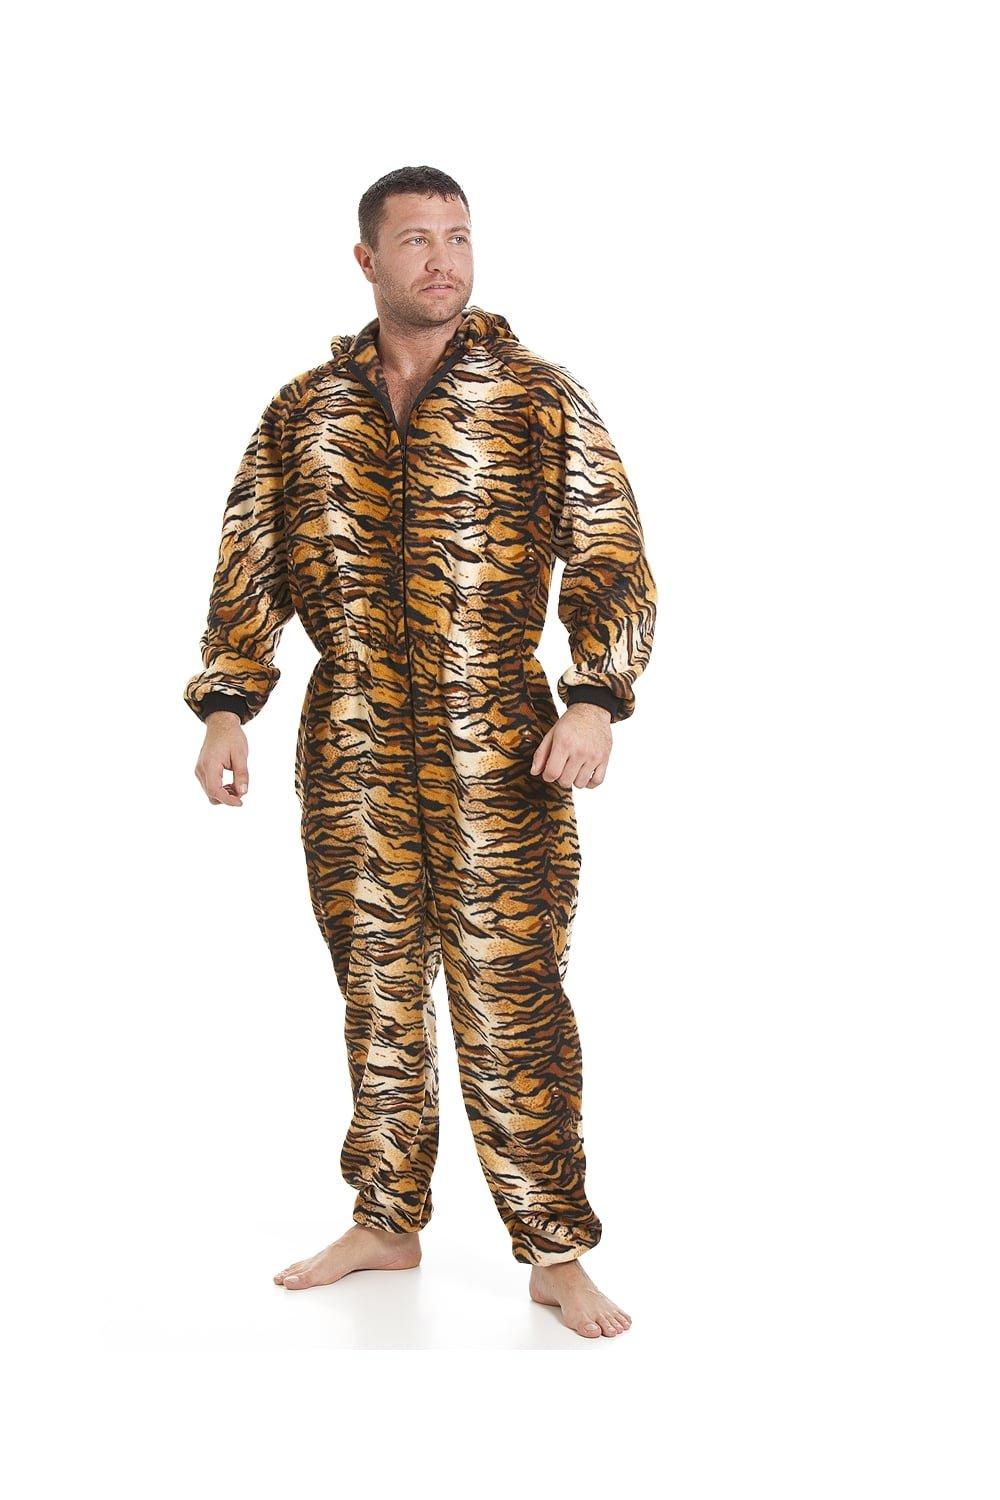 Luxury Supersoft Animal Print Tiger Hooded Onesie